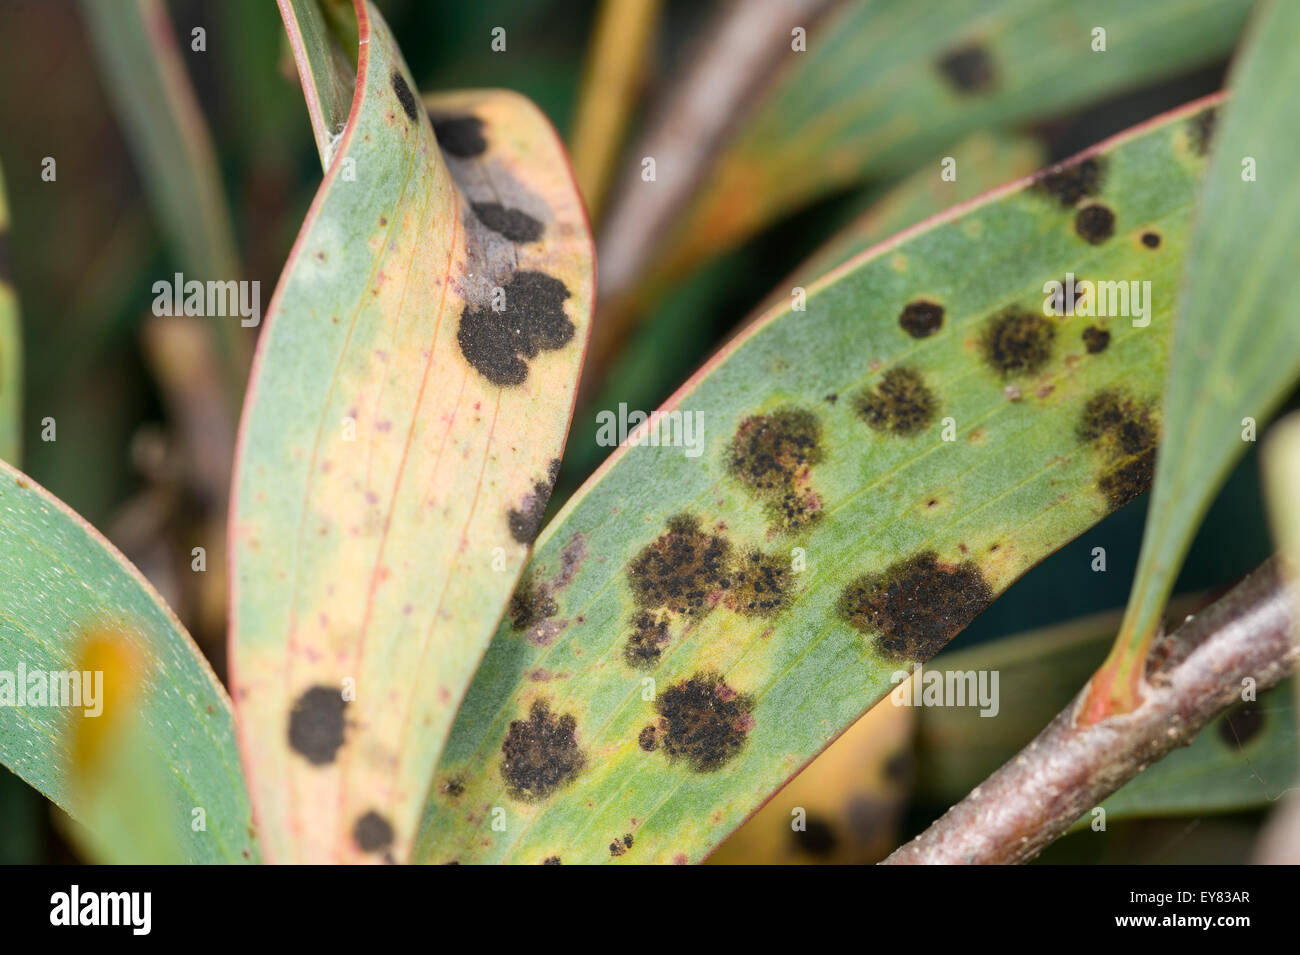 Fungal leaf spot on Hakea laurina Stock Photo